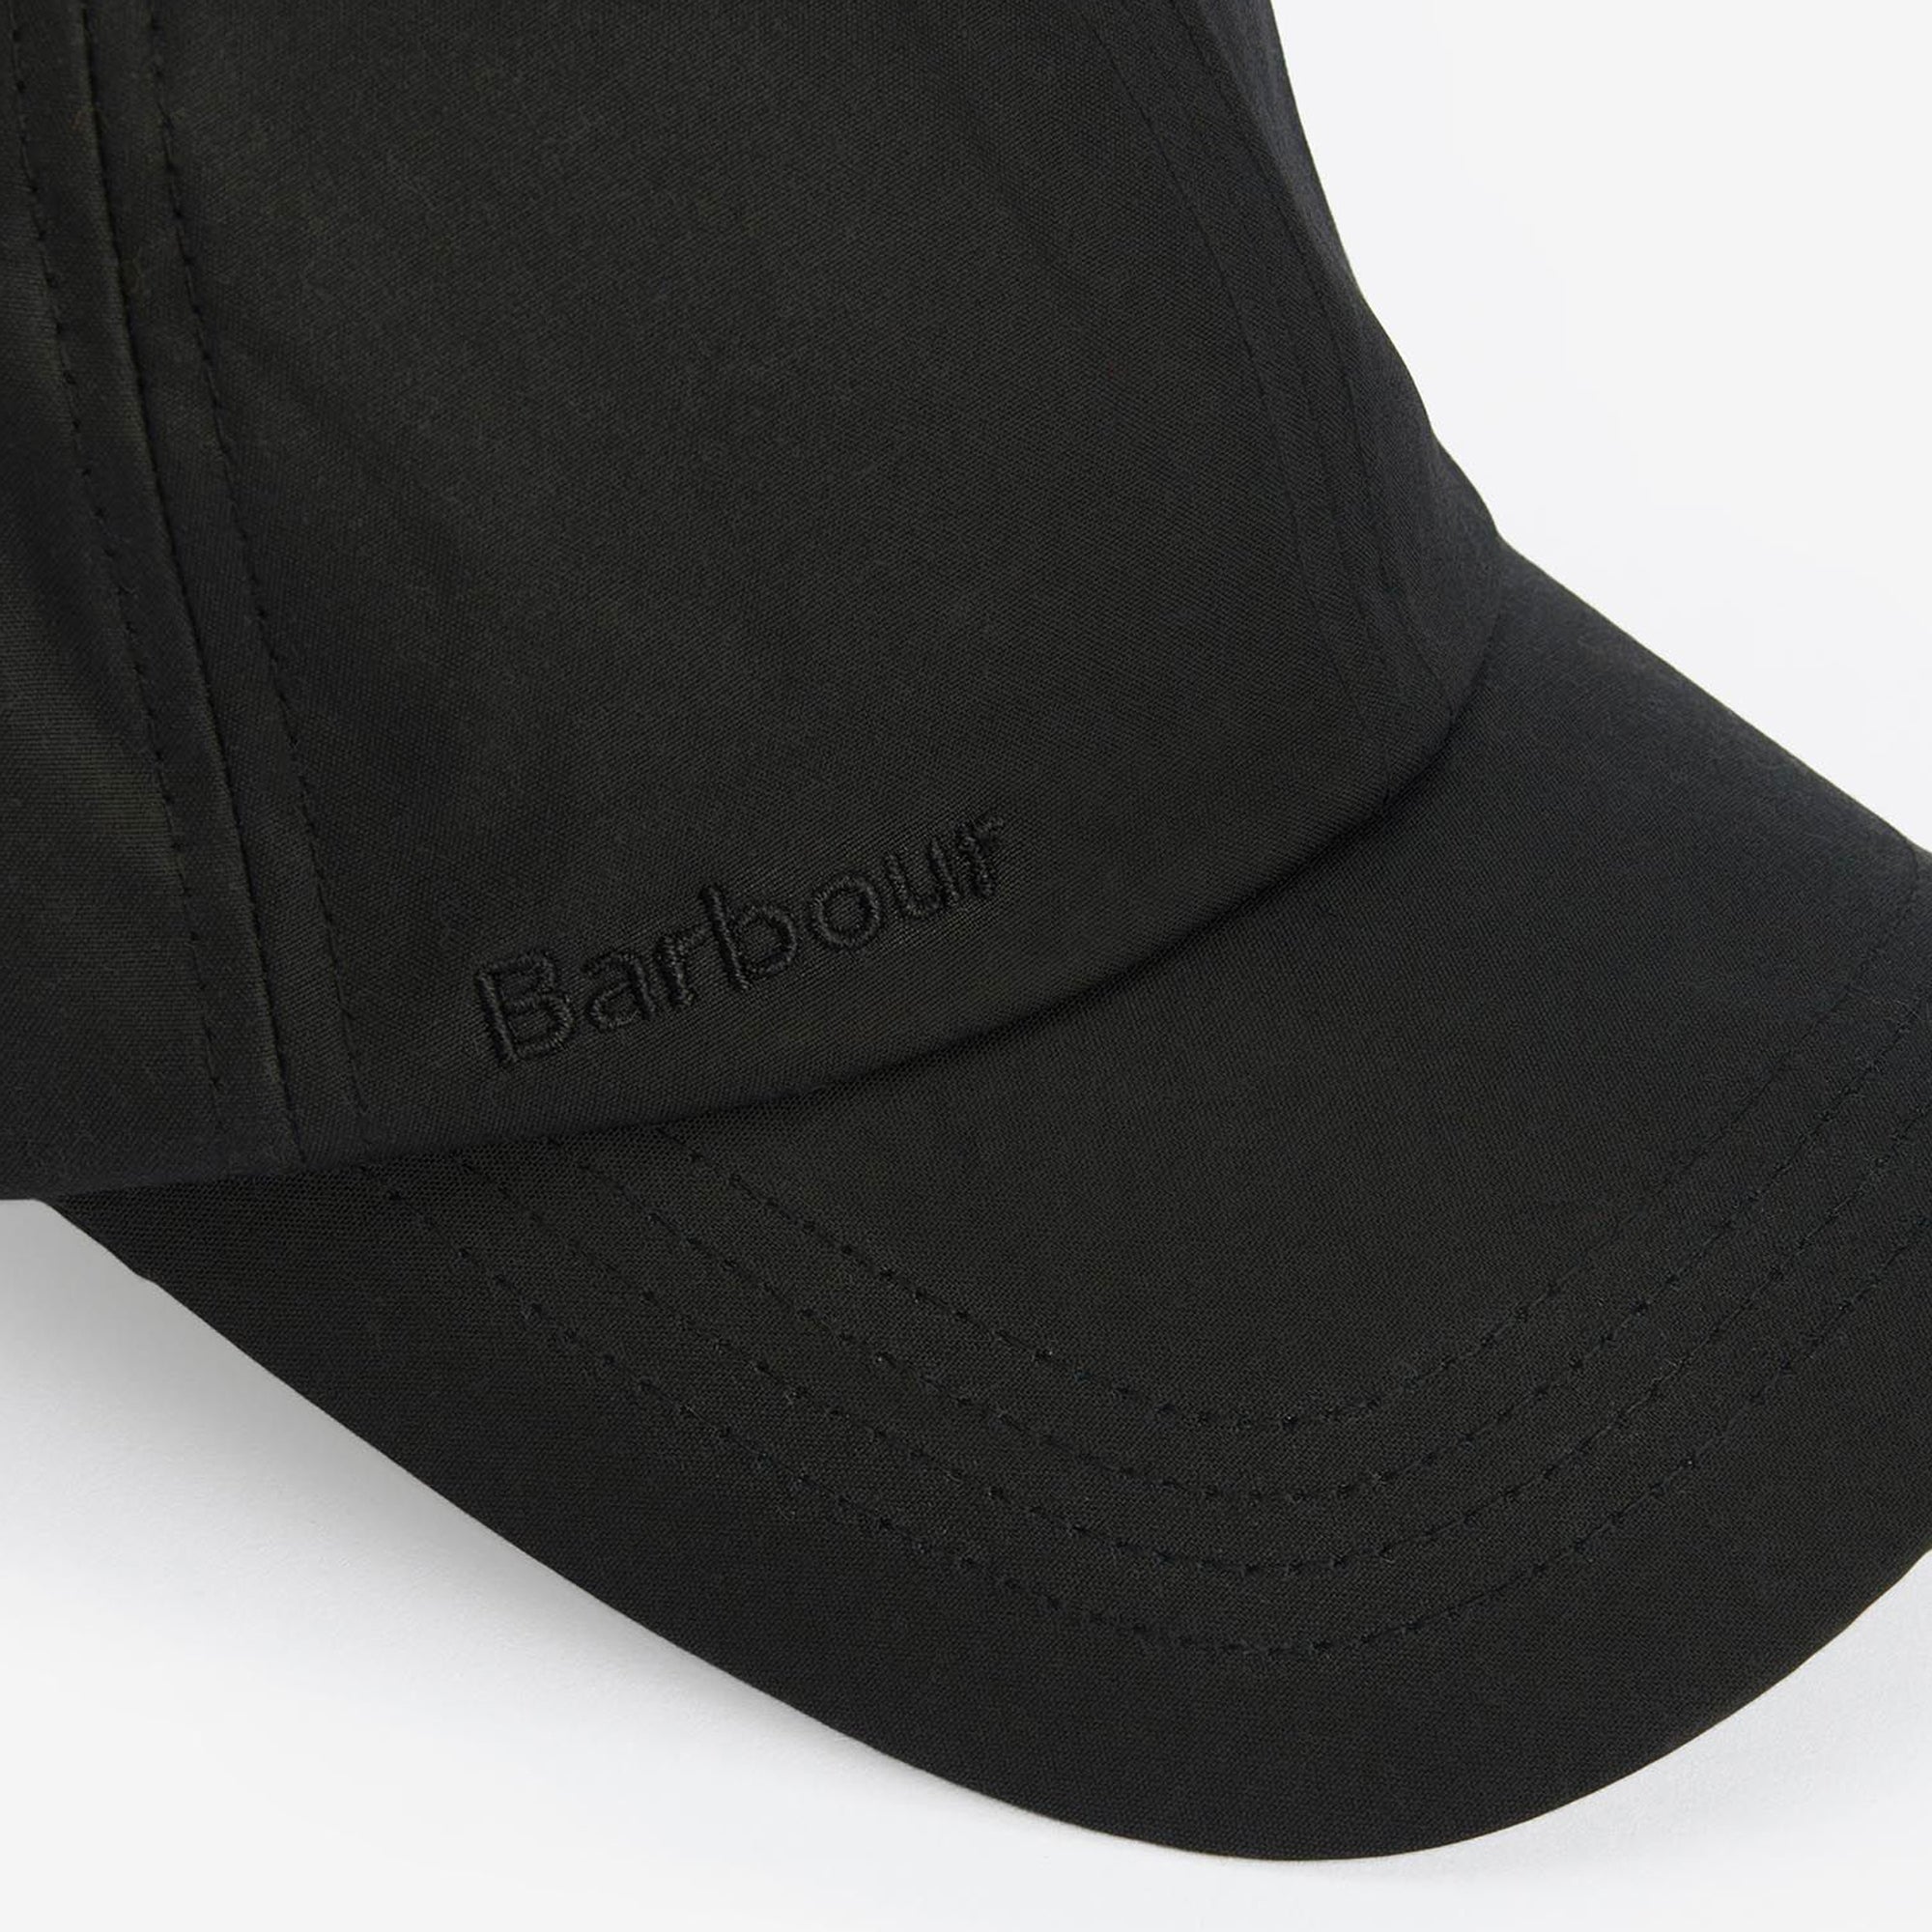 Barbour Wax Sports Cap - Black